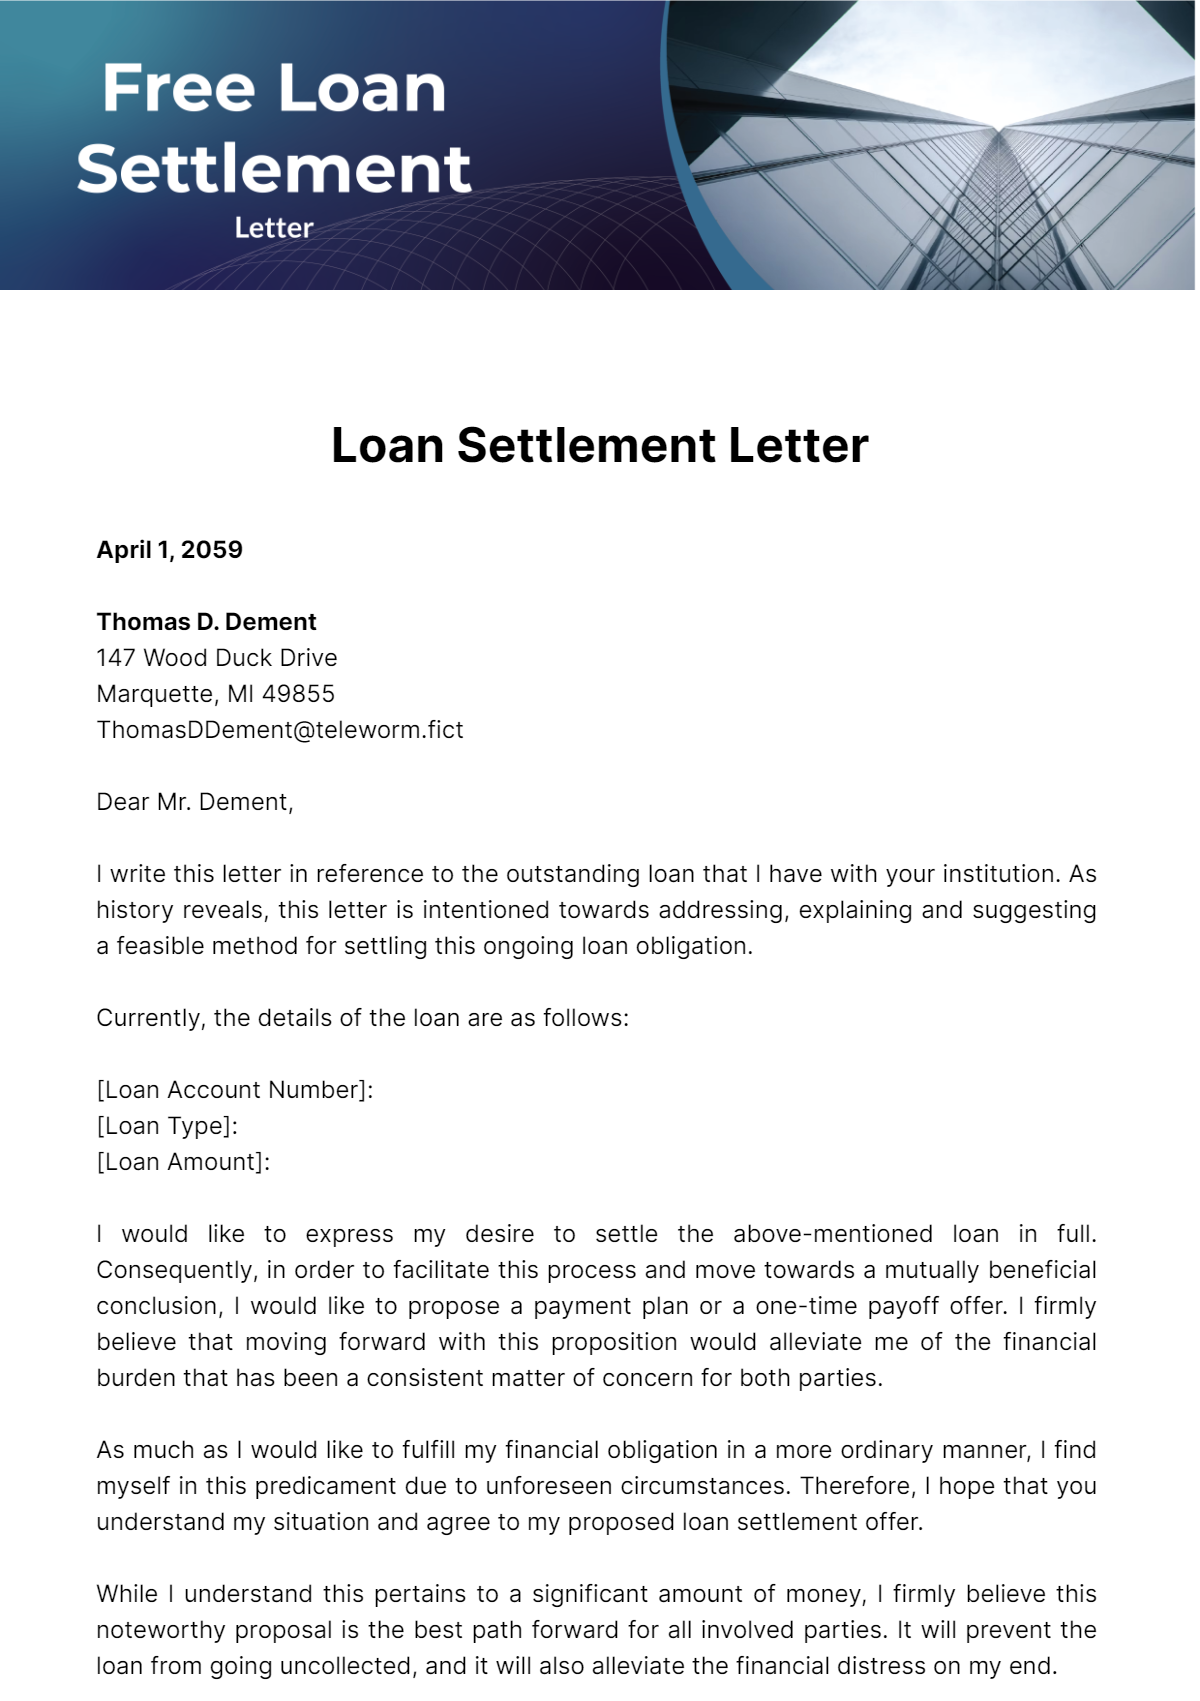 Free Loan Settlement Letter Template